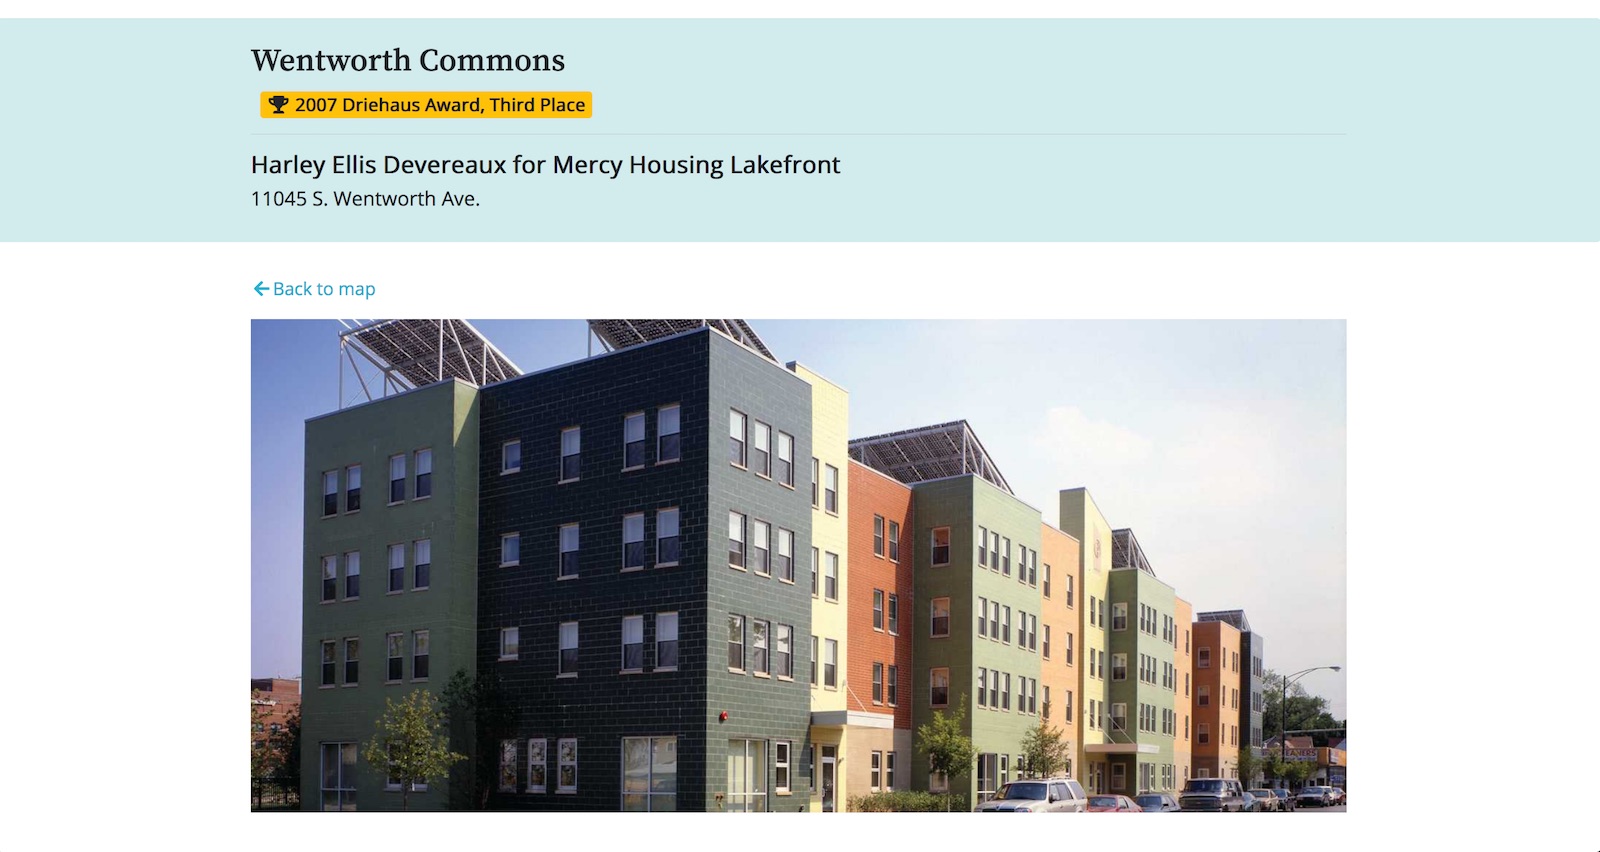 The Chicago Neighborhood Development Awards Website